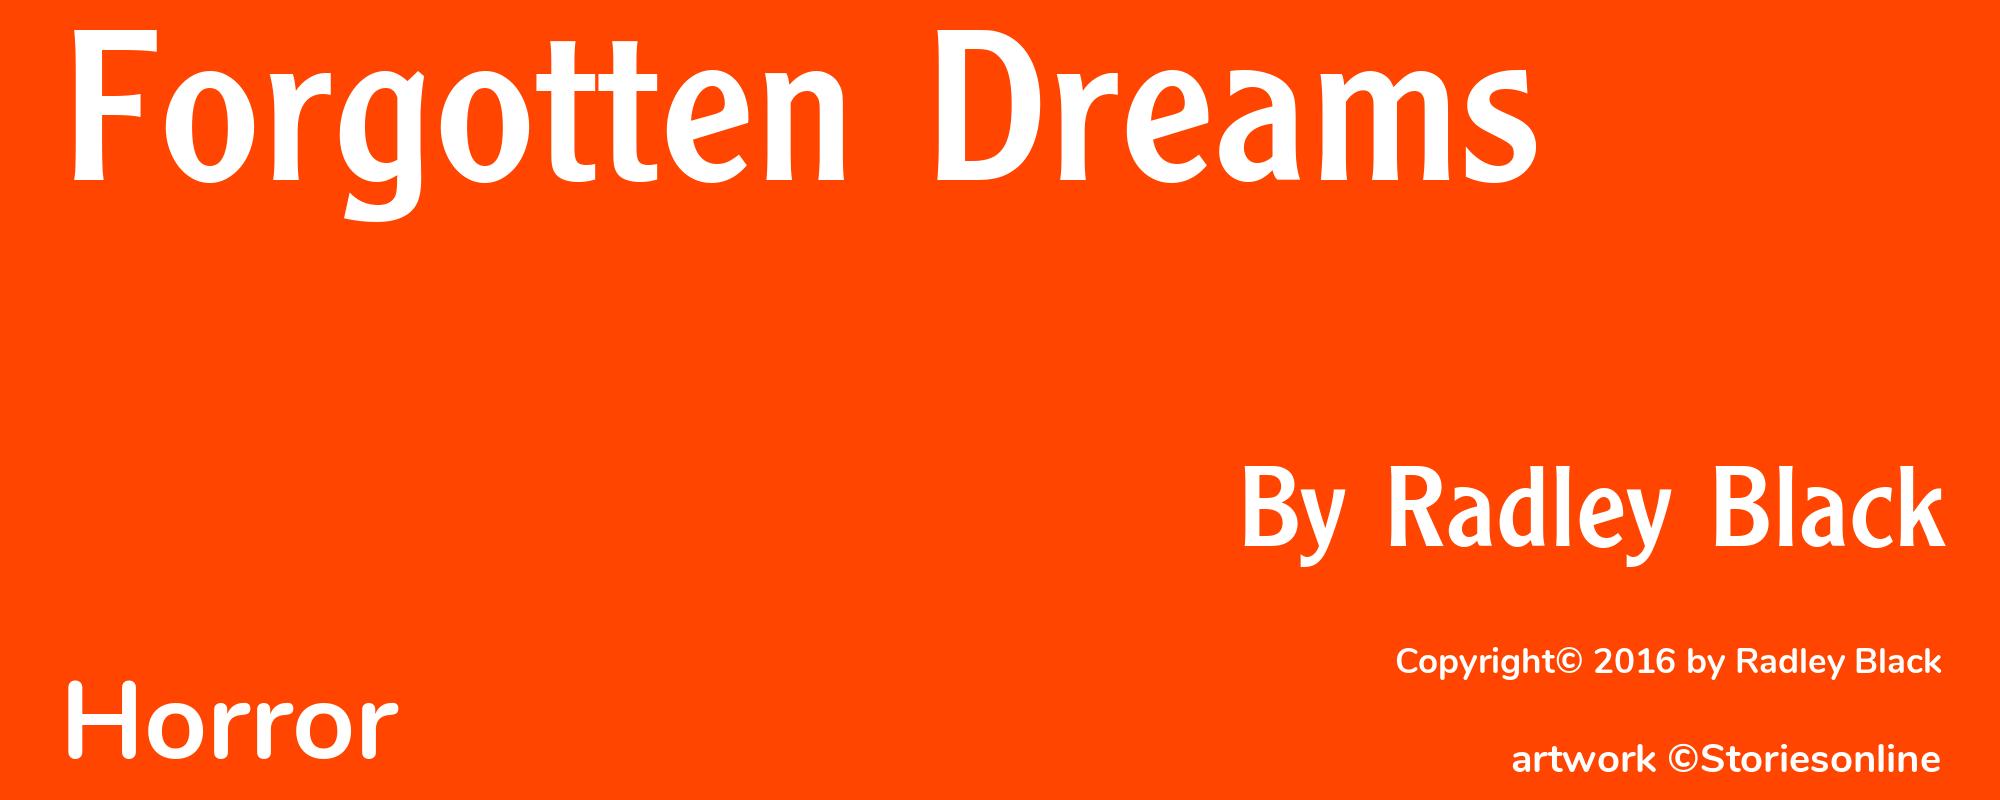 Forgotten Dreams - Cover